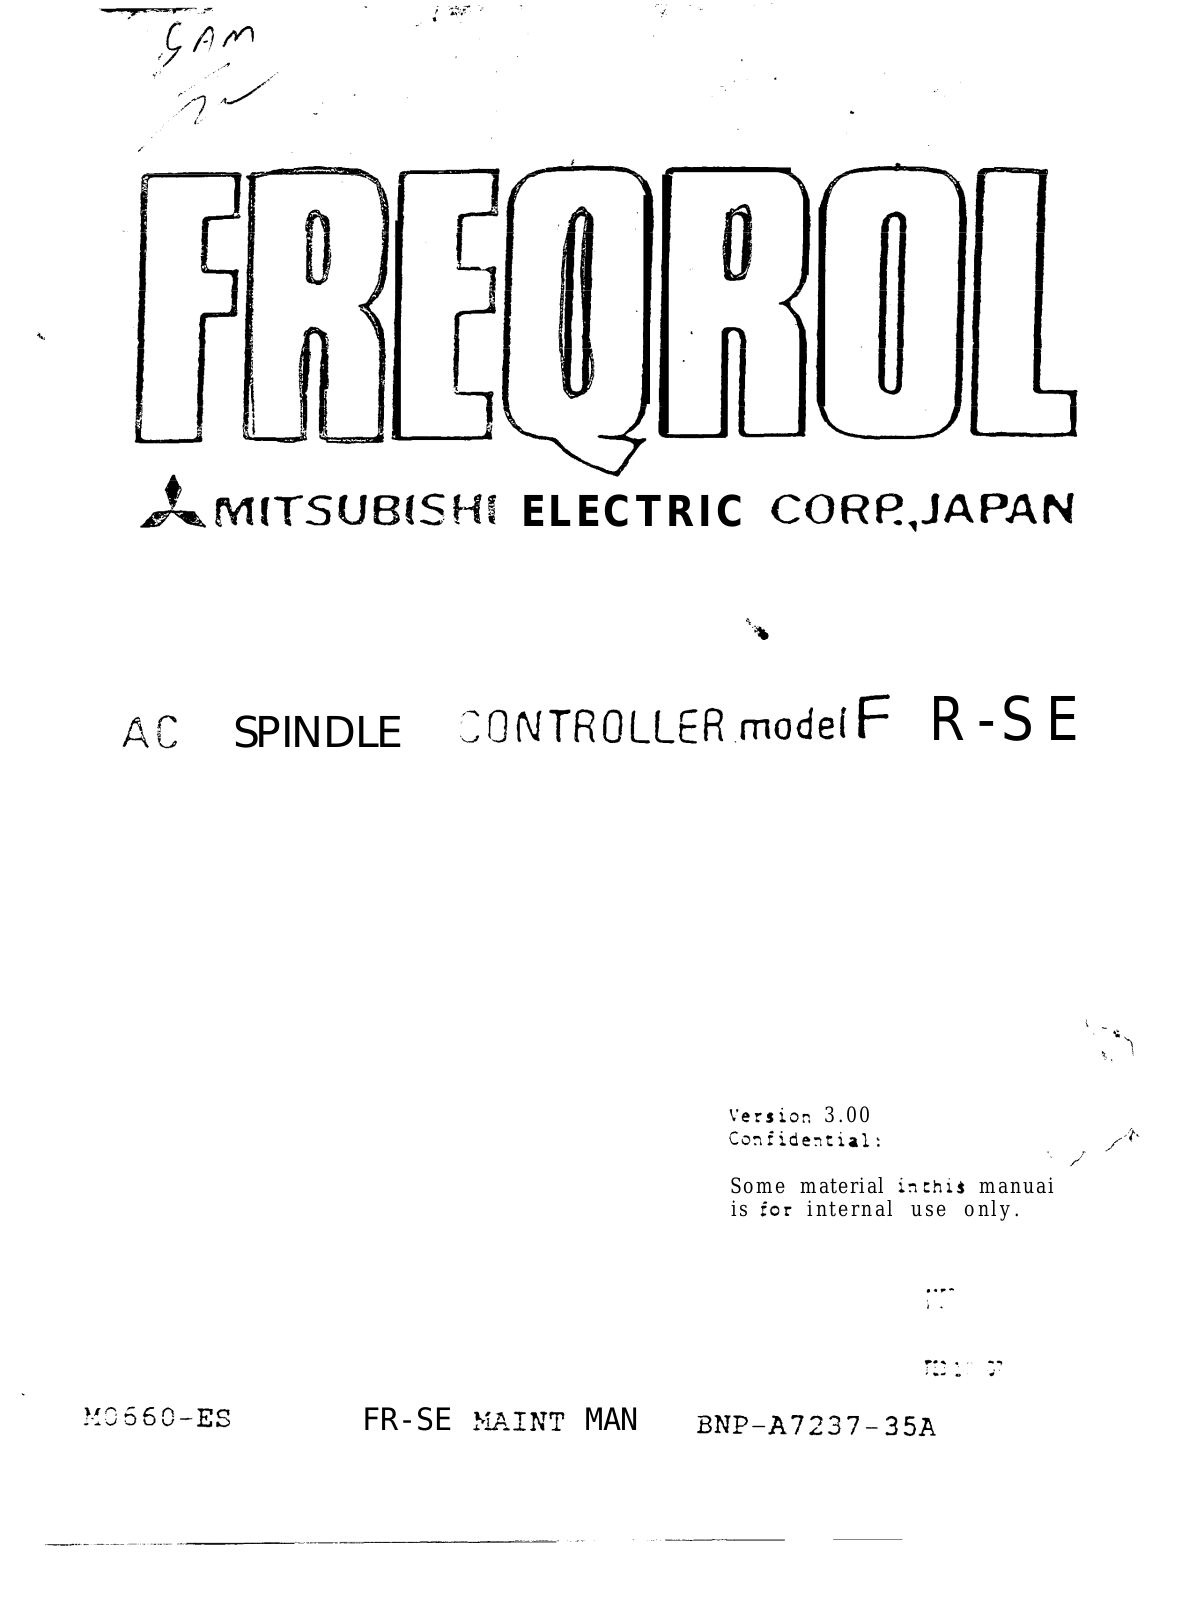 mitsubishi FR-SE Maintenance Manual